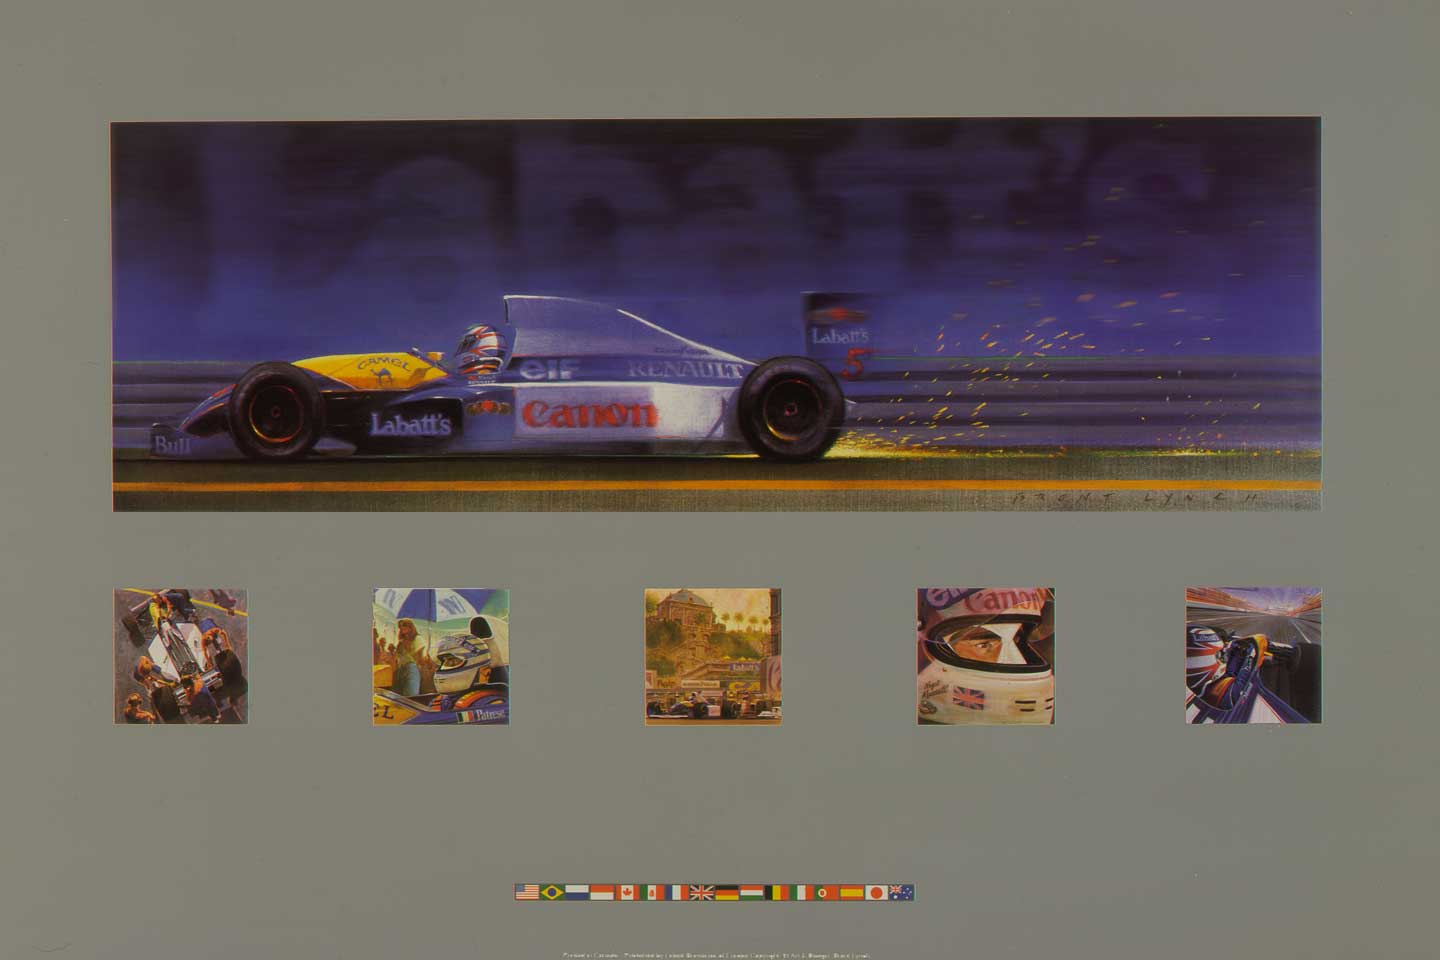 1990 - International Car Racing, Formula 1 'Williams Team Champions', series of paintings celebrating the teams year in racing.